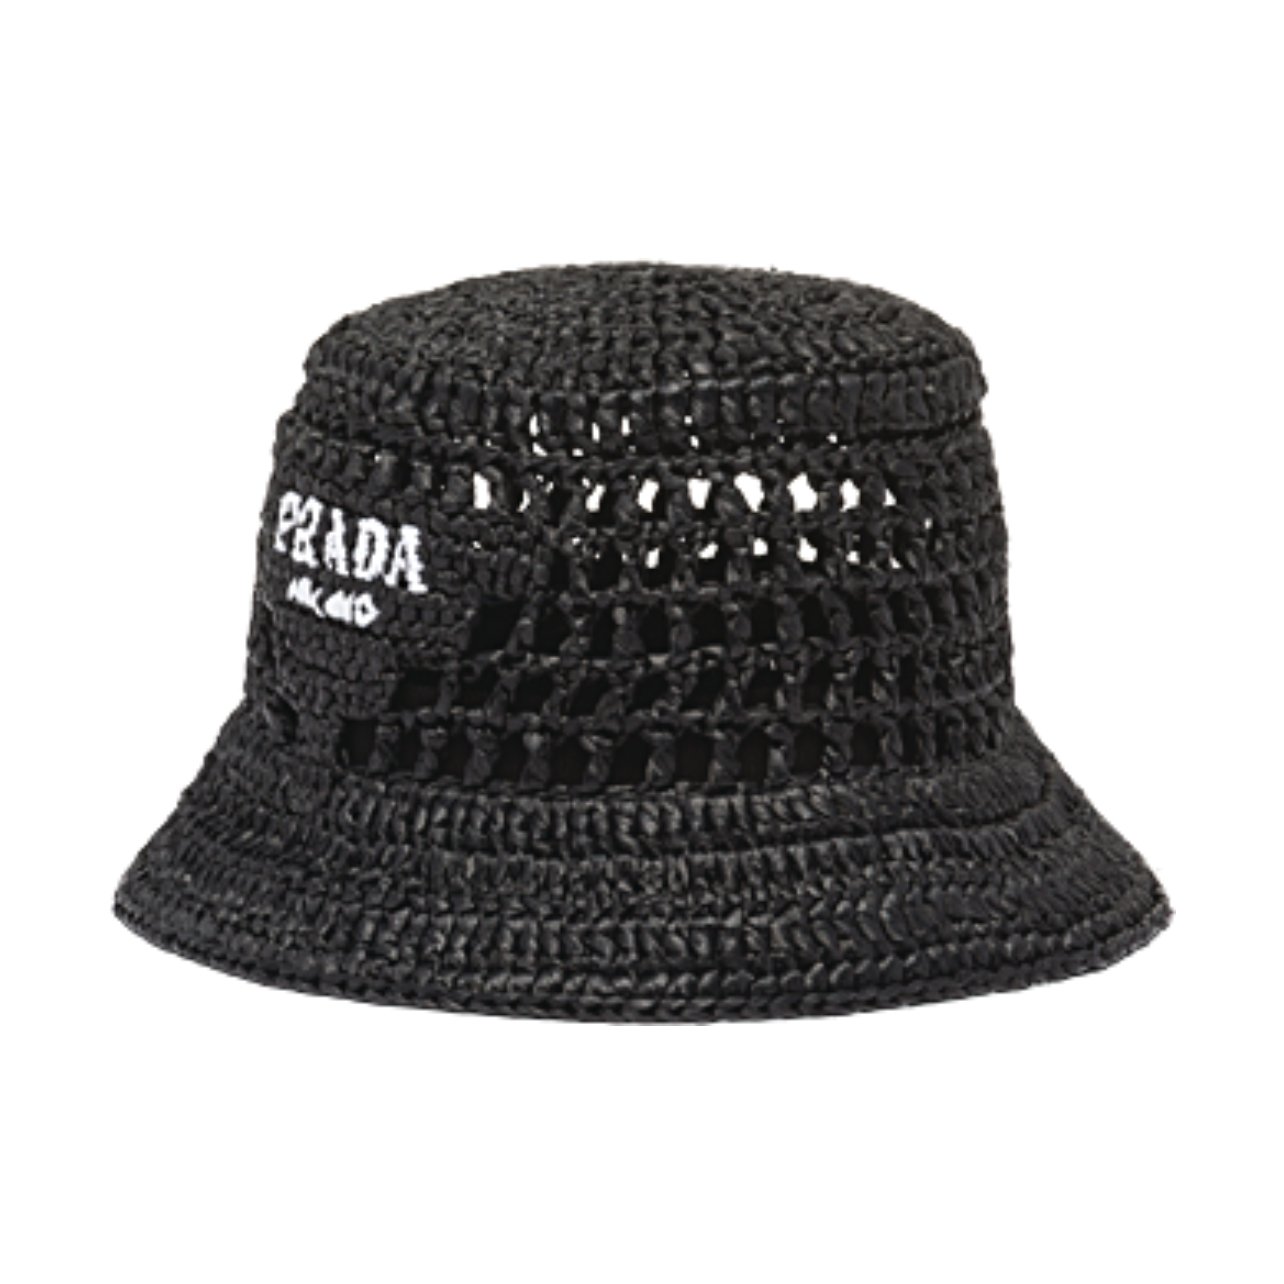 Black Prada raffia bucket hat